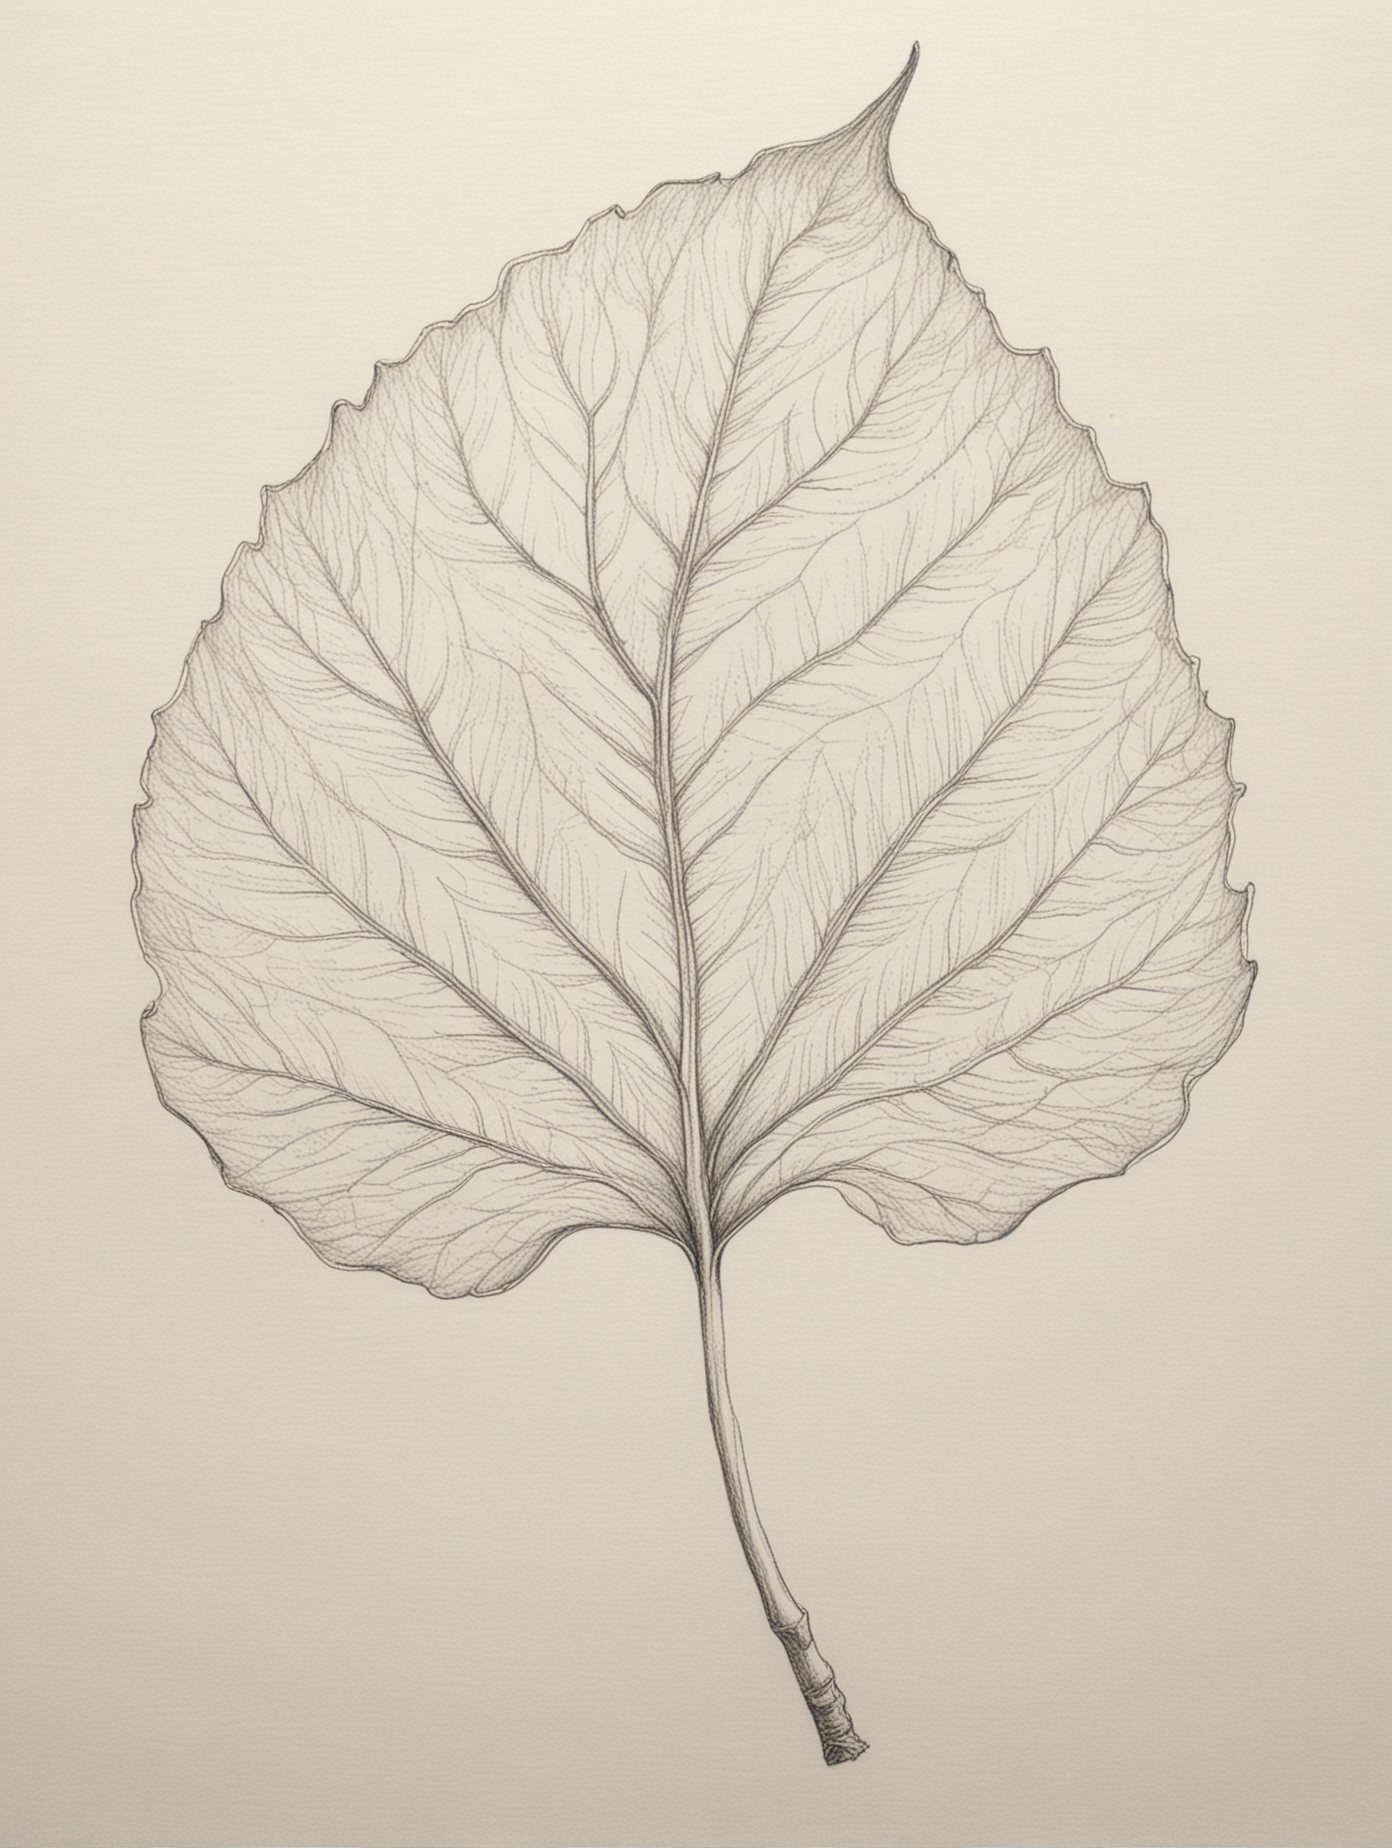 Curled Edge Leaf Pencil Sketch Outline